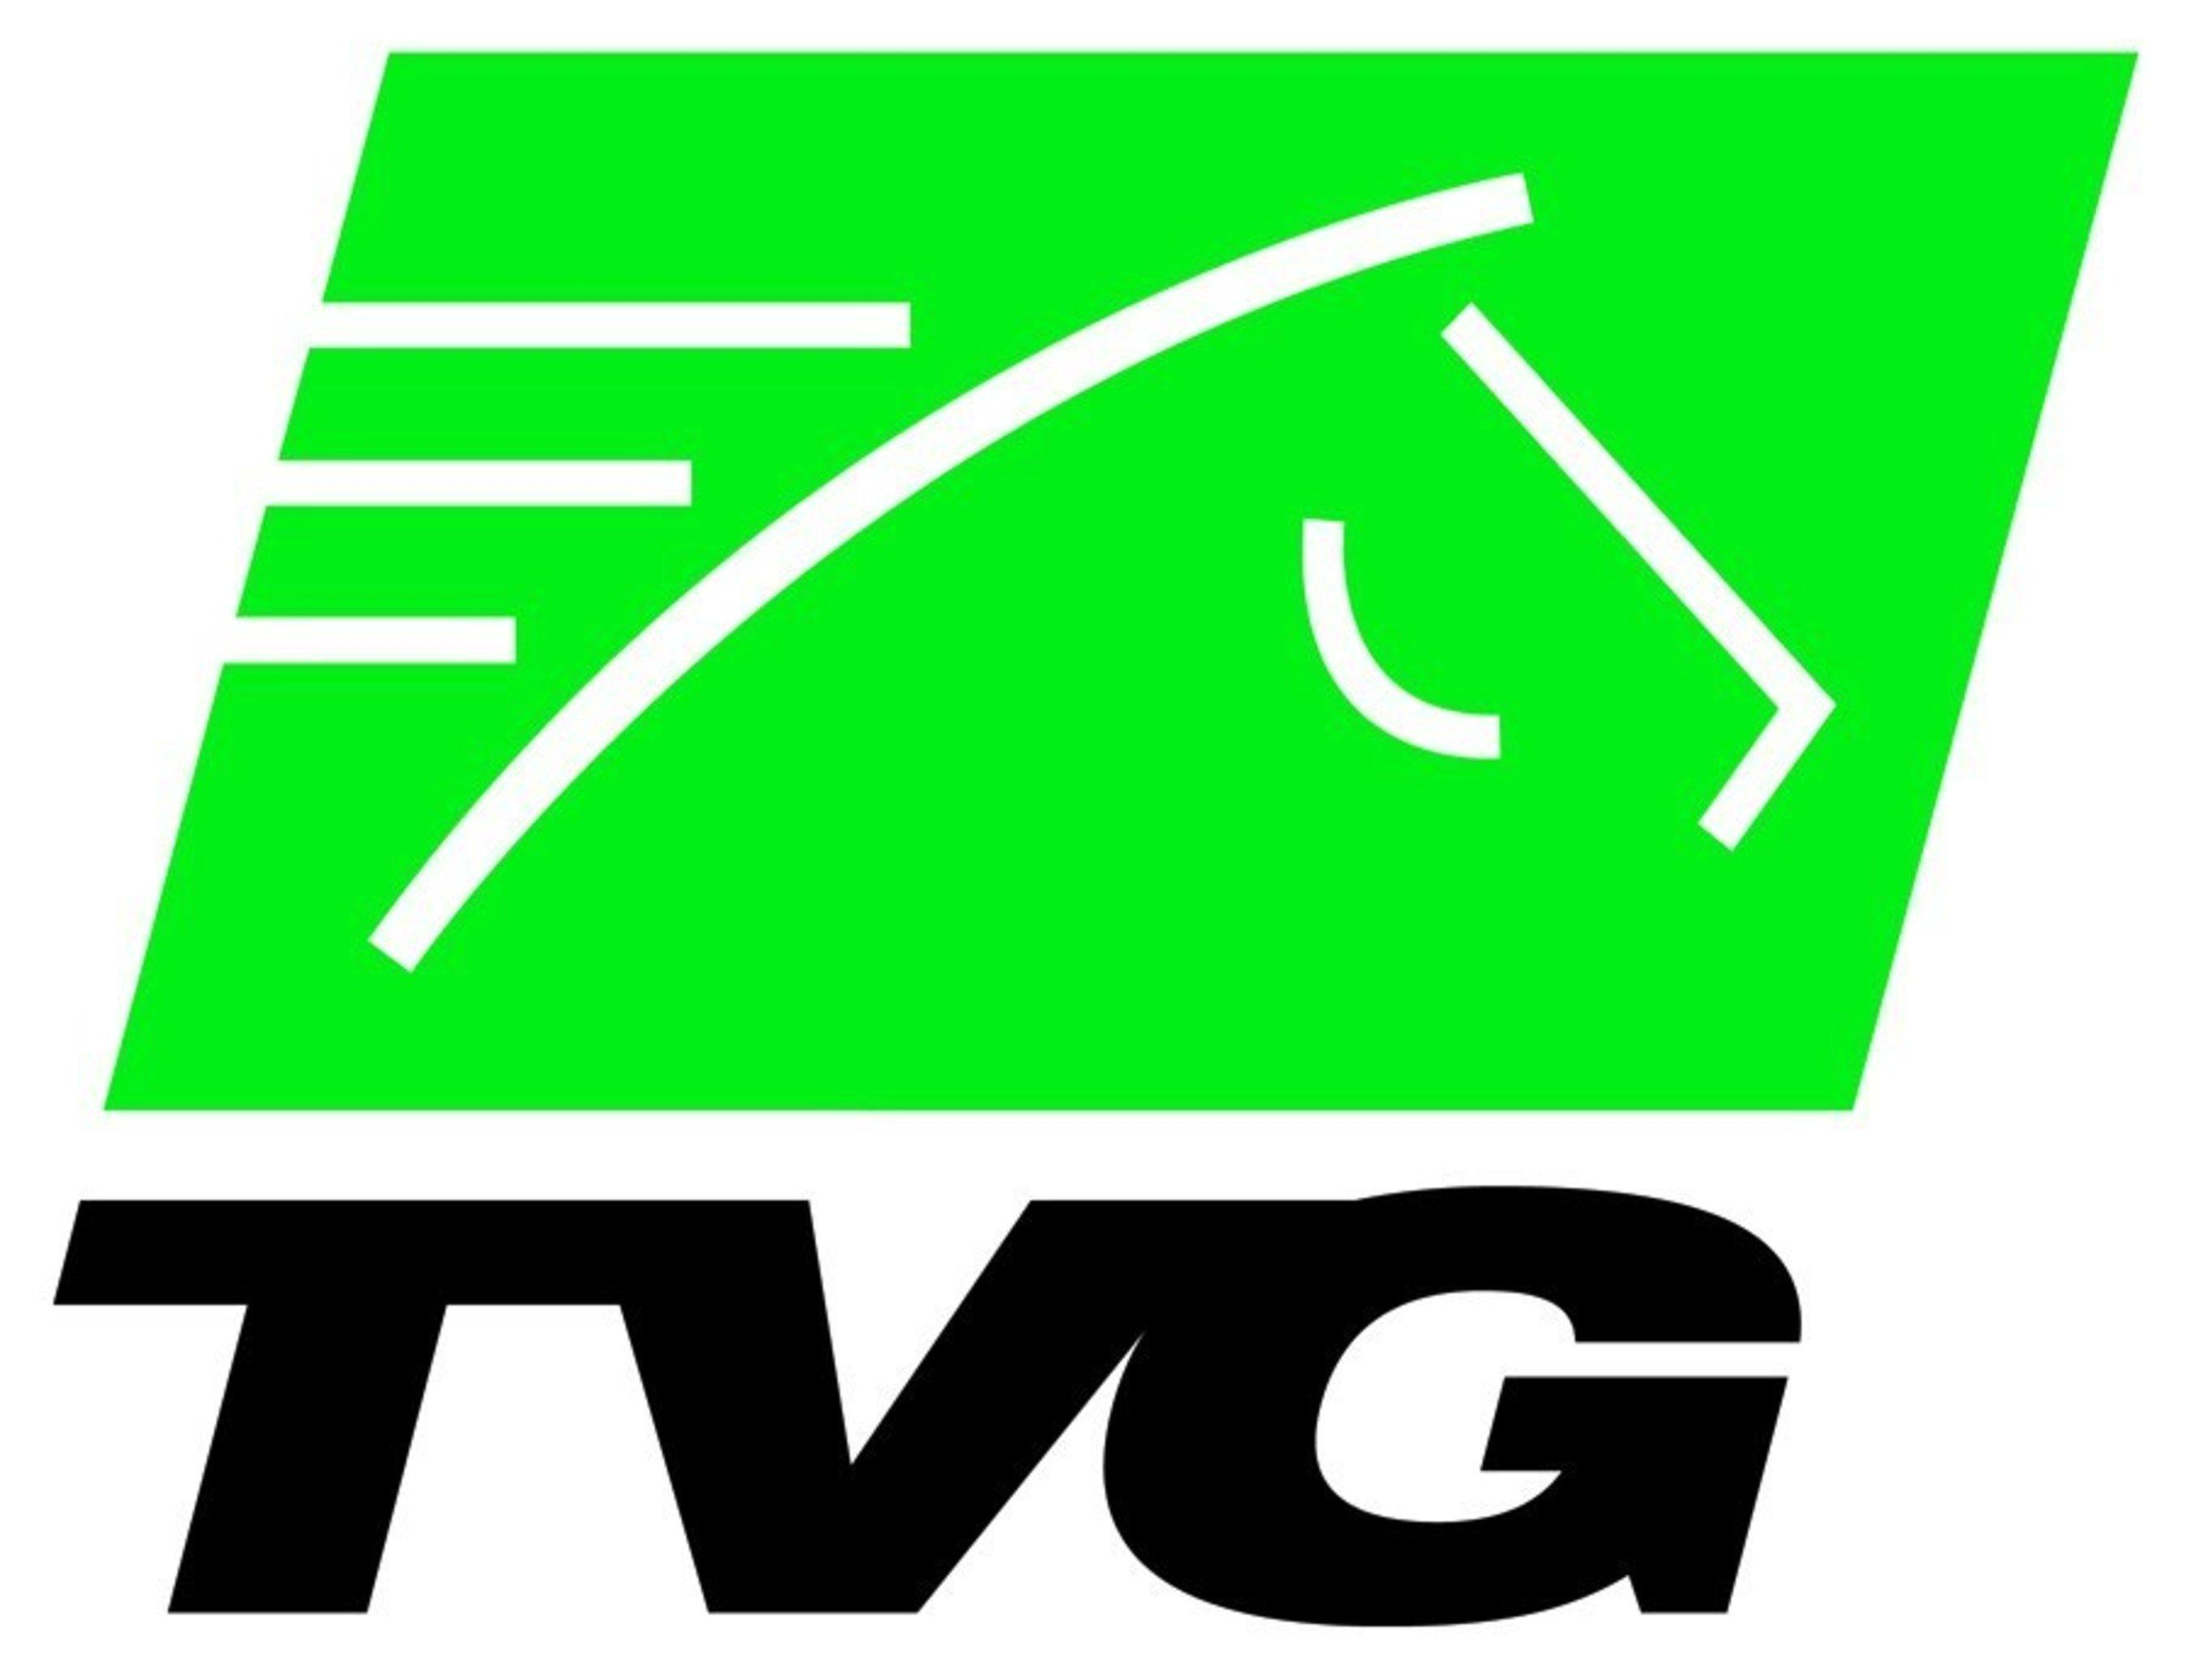 TVG Logo - Betfair US First Half Revenue Up 17%